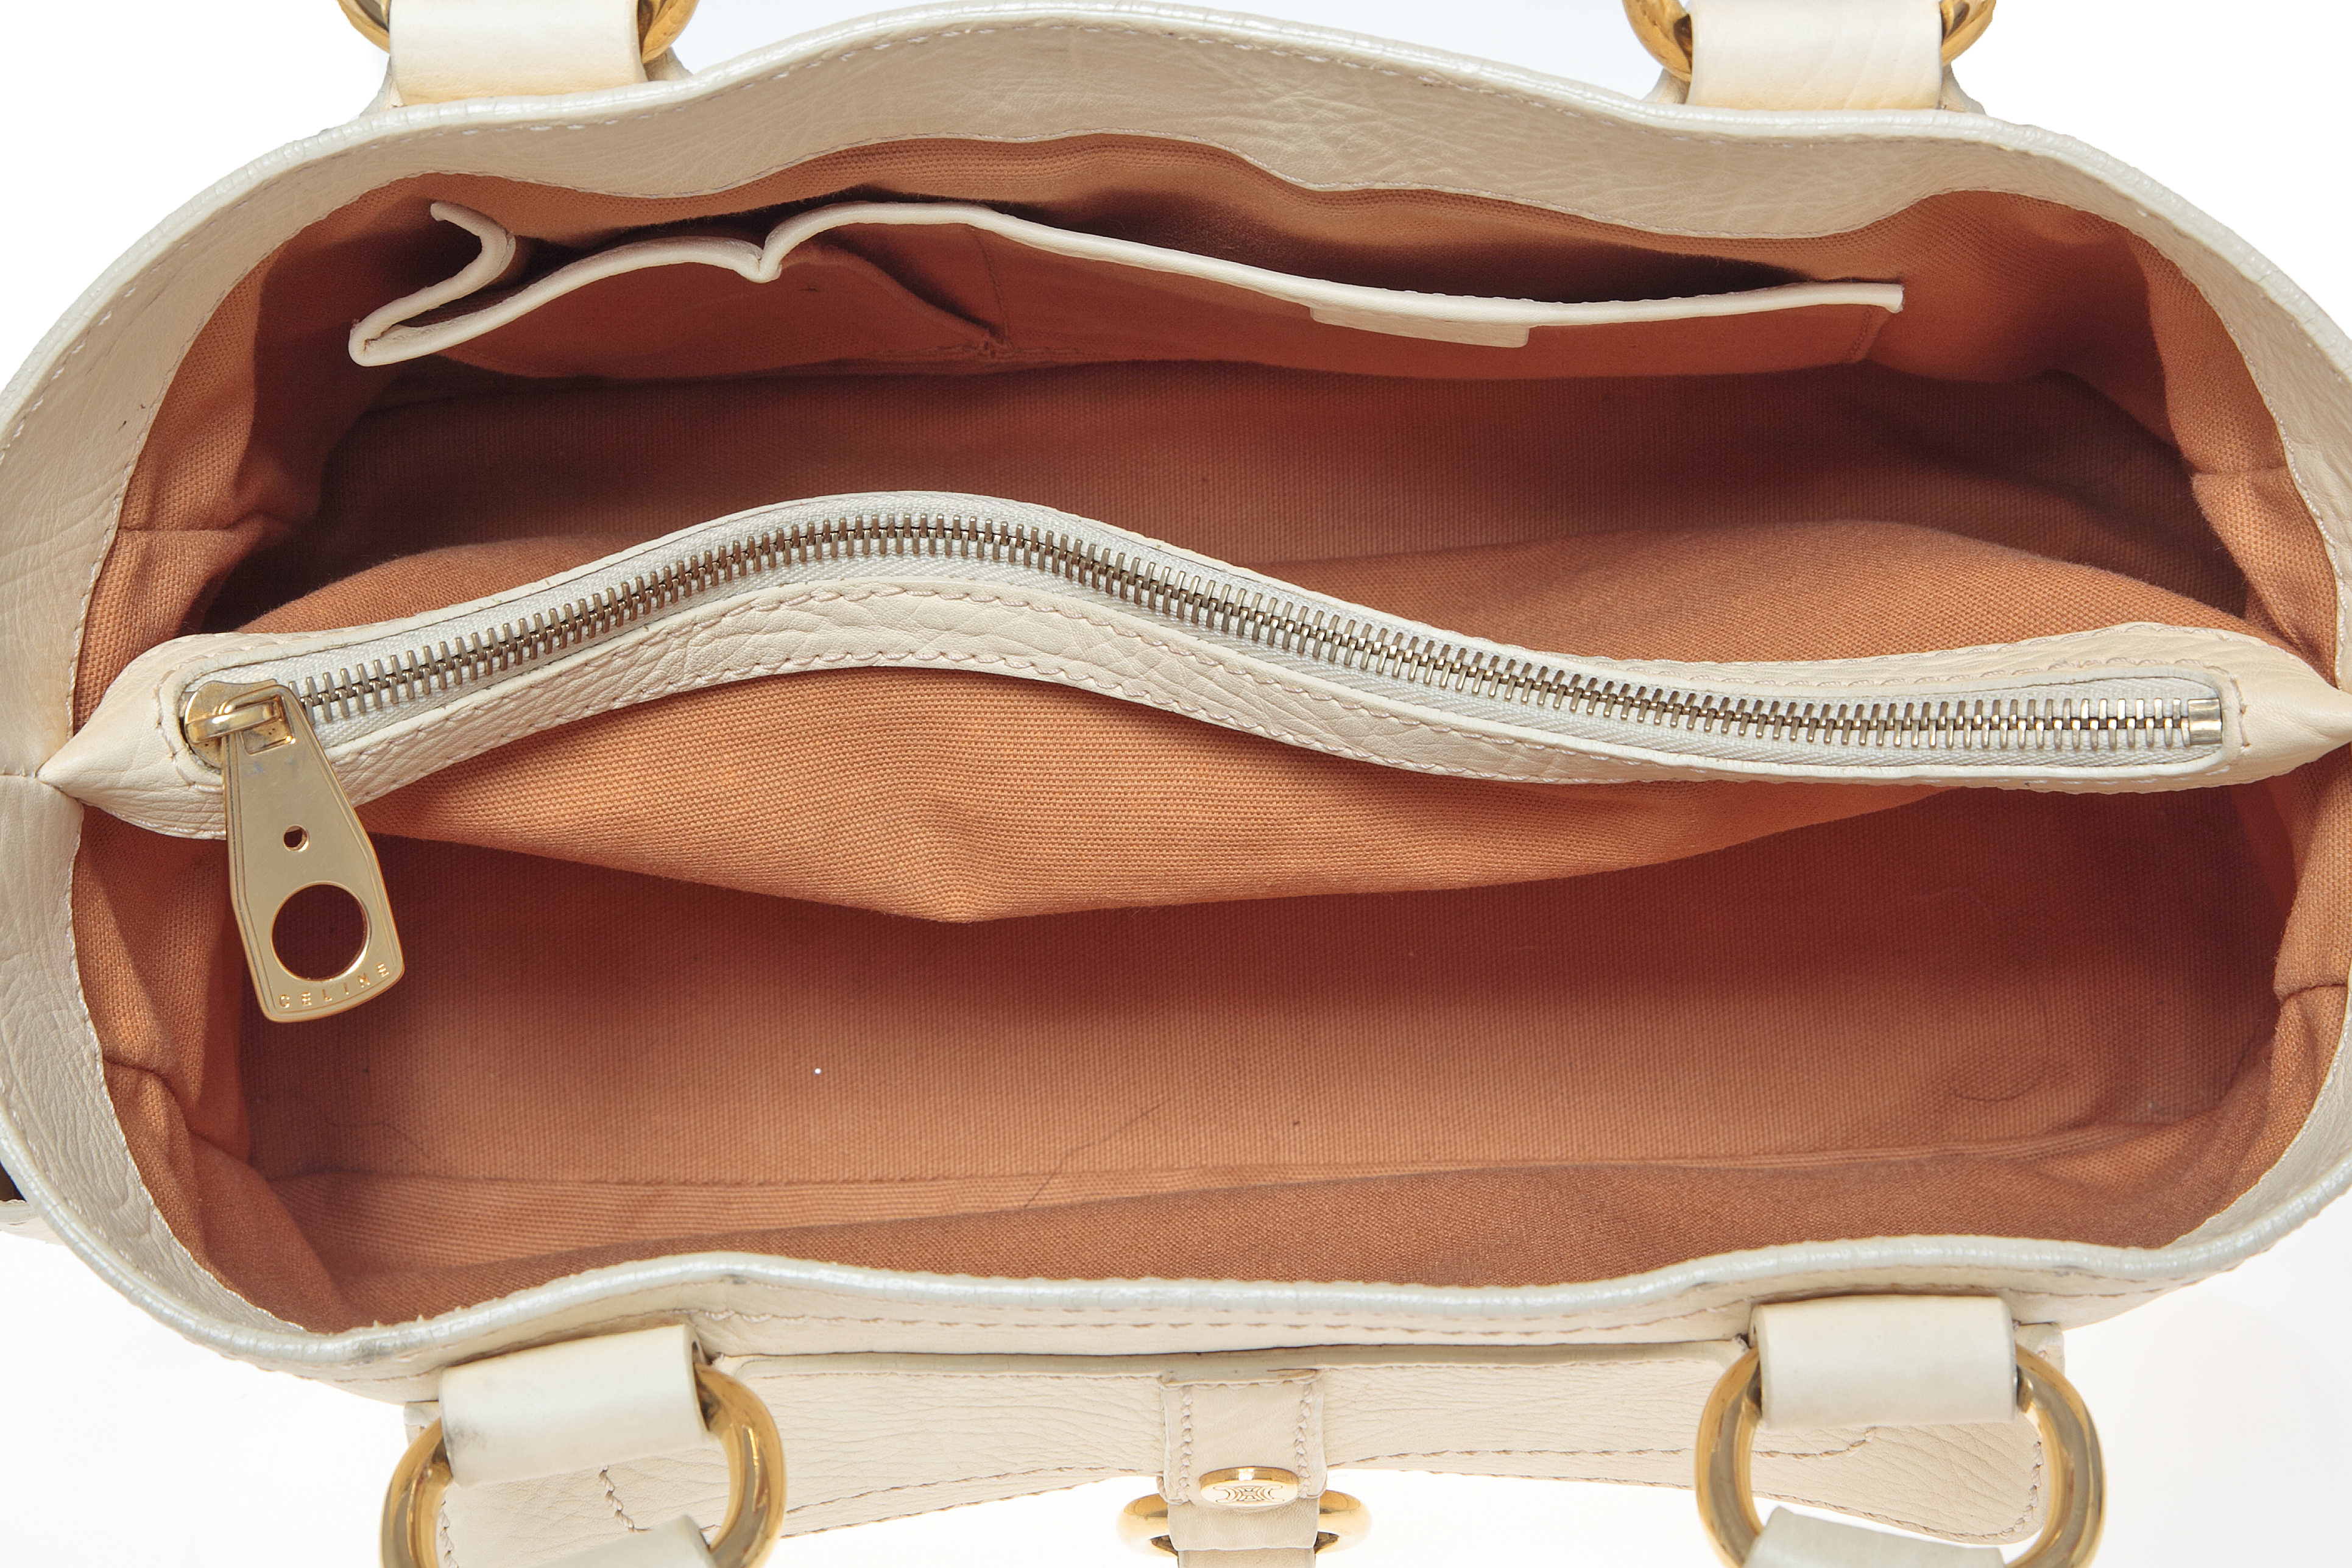 Gerard Darel Authenticated Leather Handbag